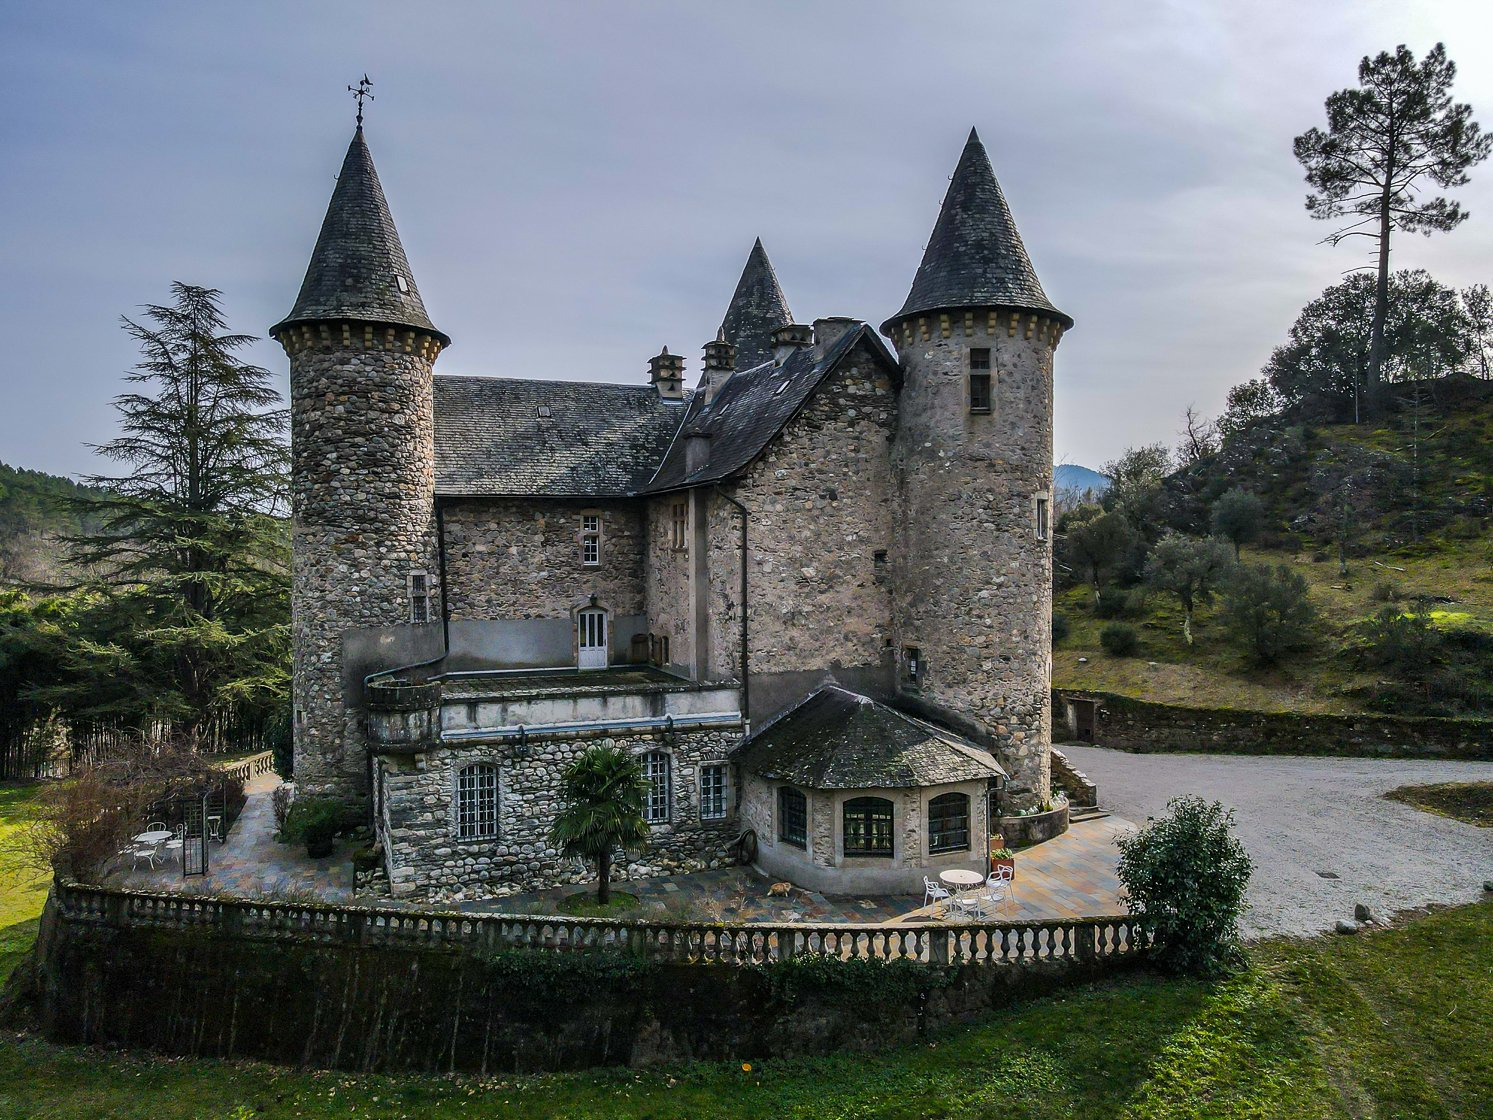 Francis+York+Fairytale 16th Century French Chateau in the Cevennes National Park 00018.jpg